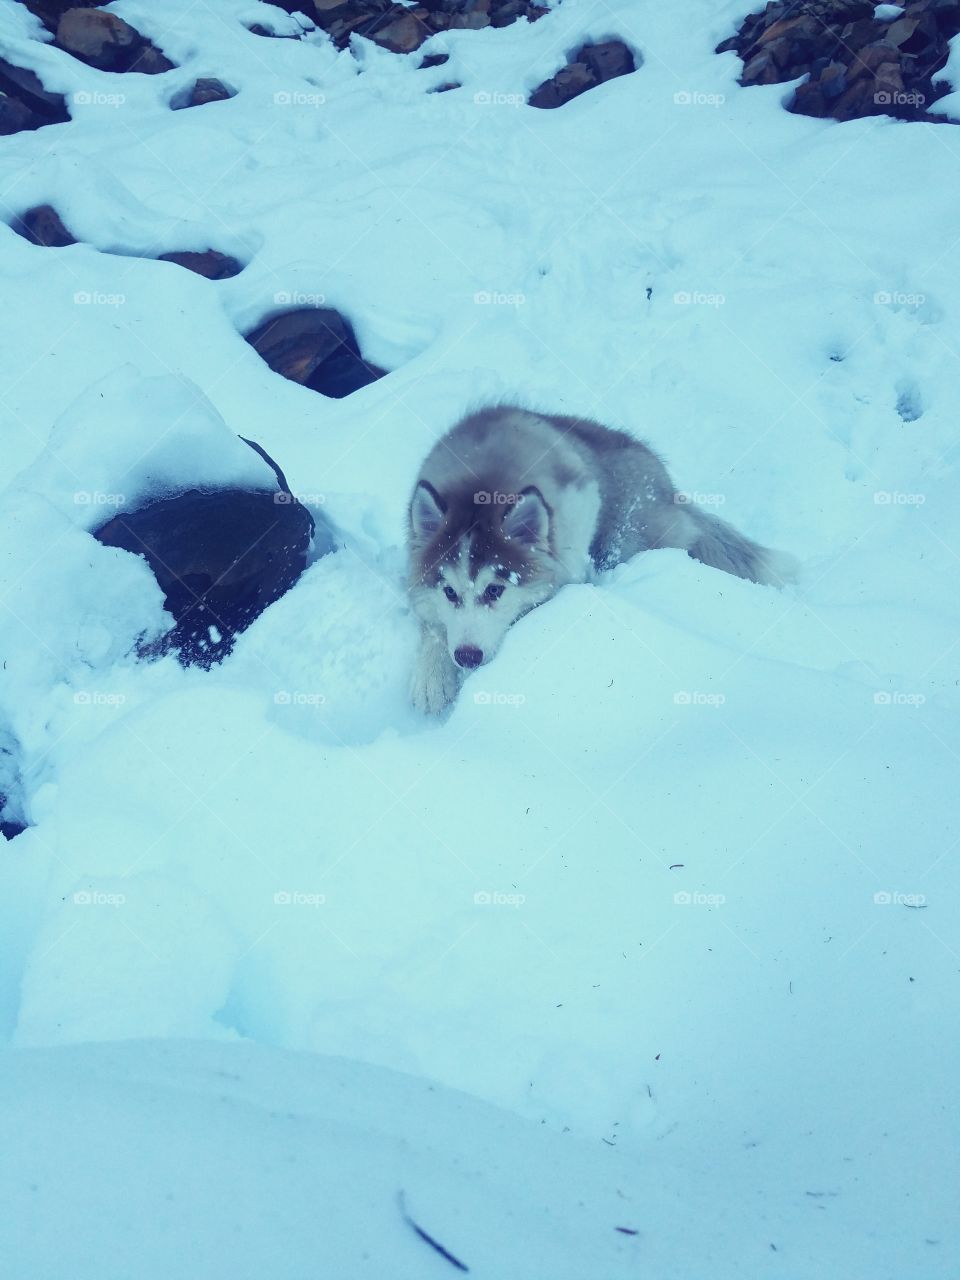 Dog in snow looking like a predator